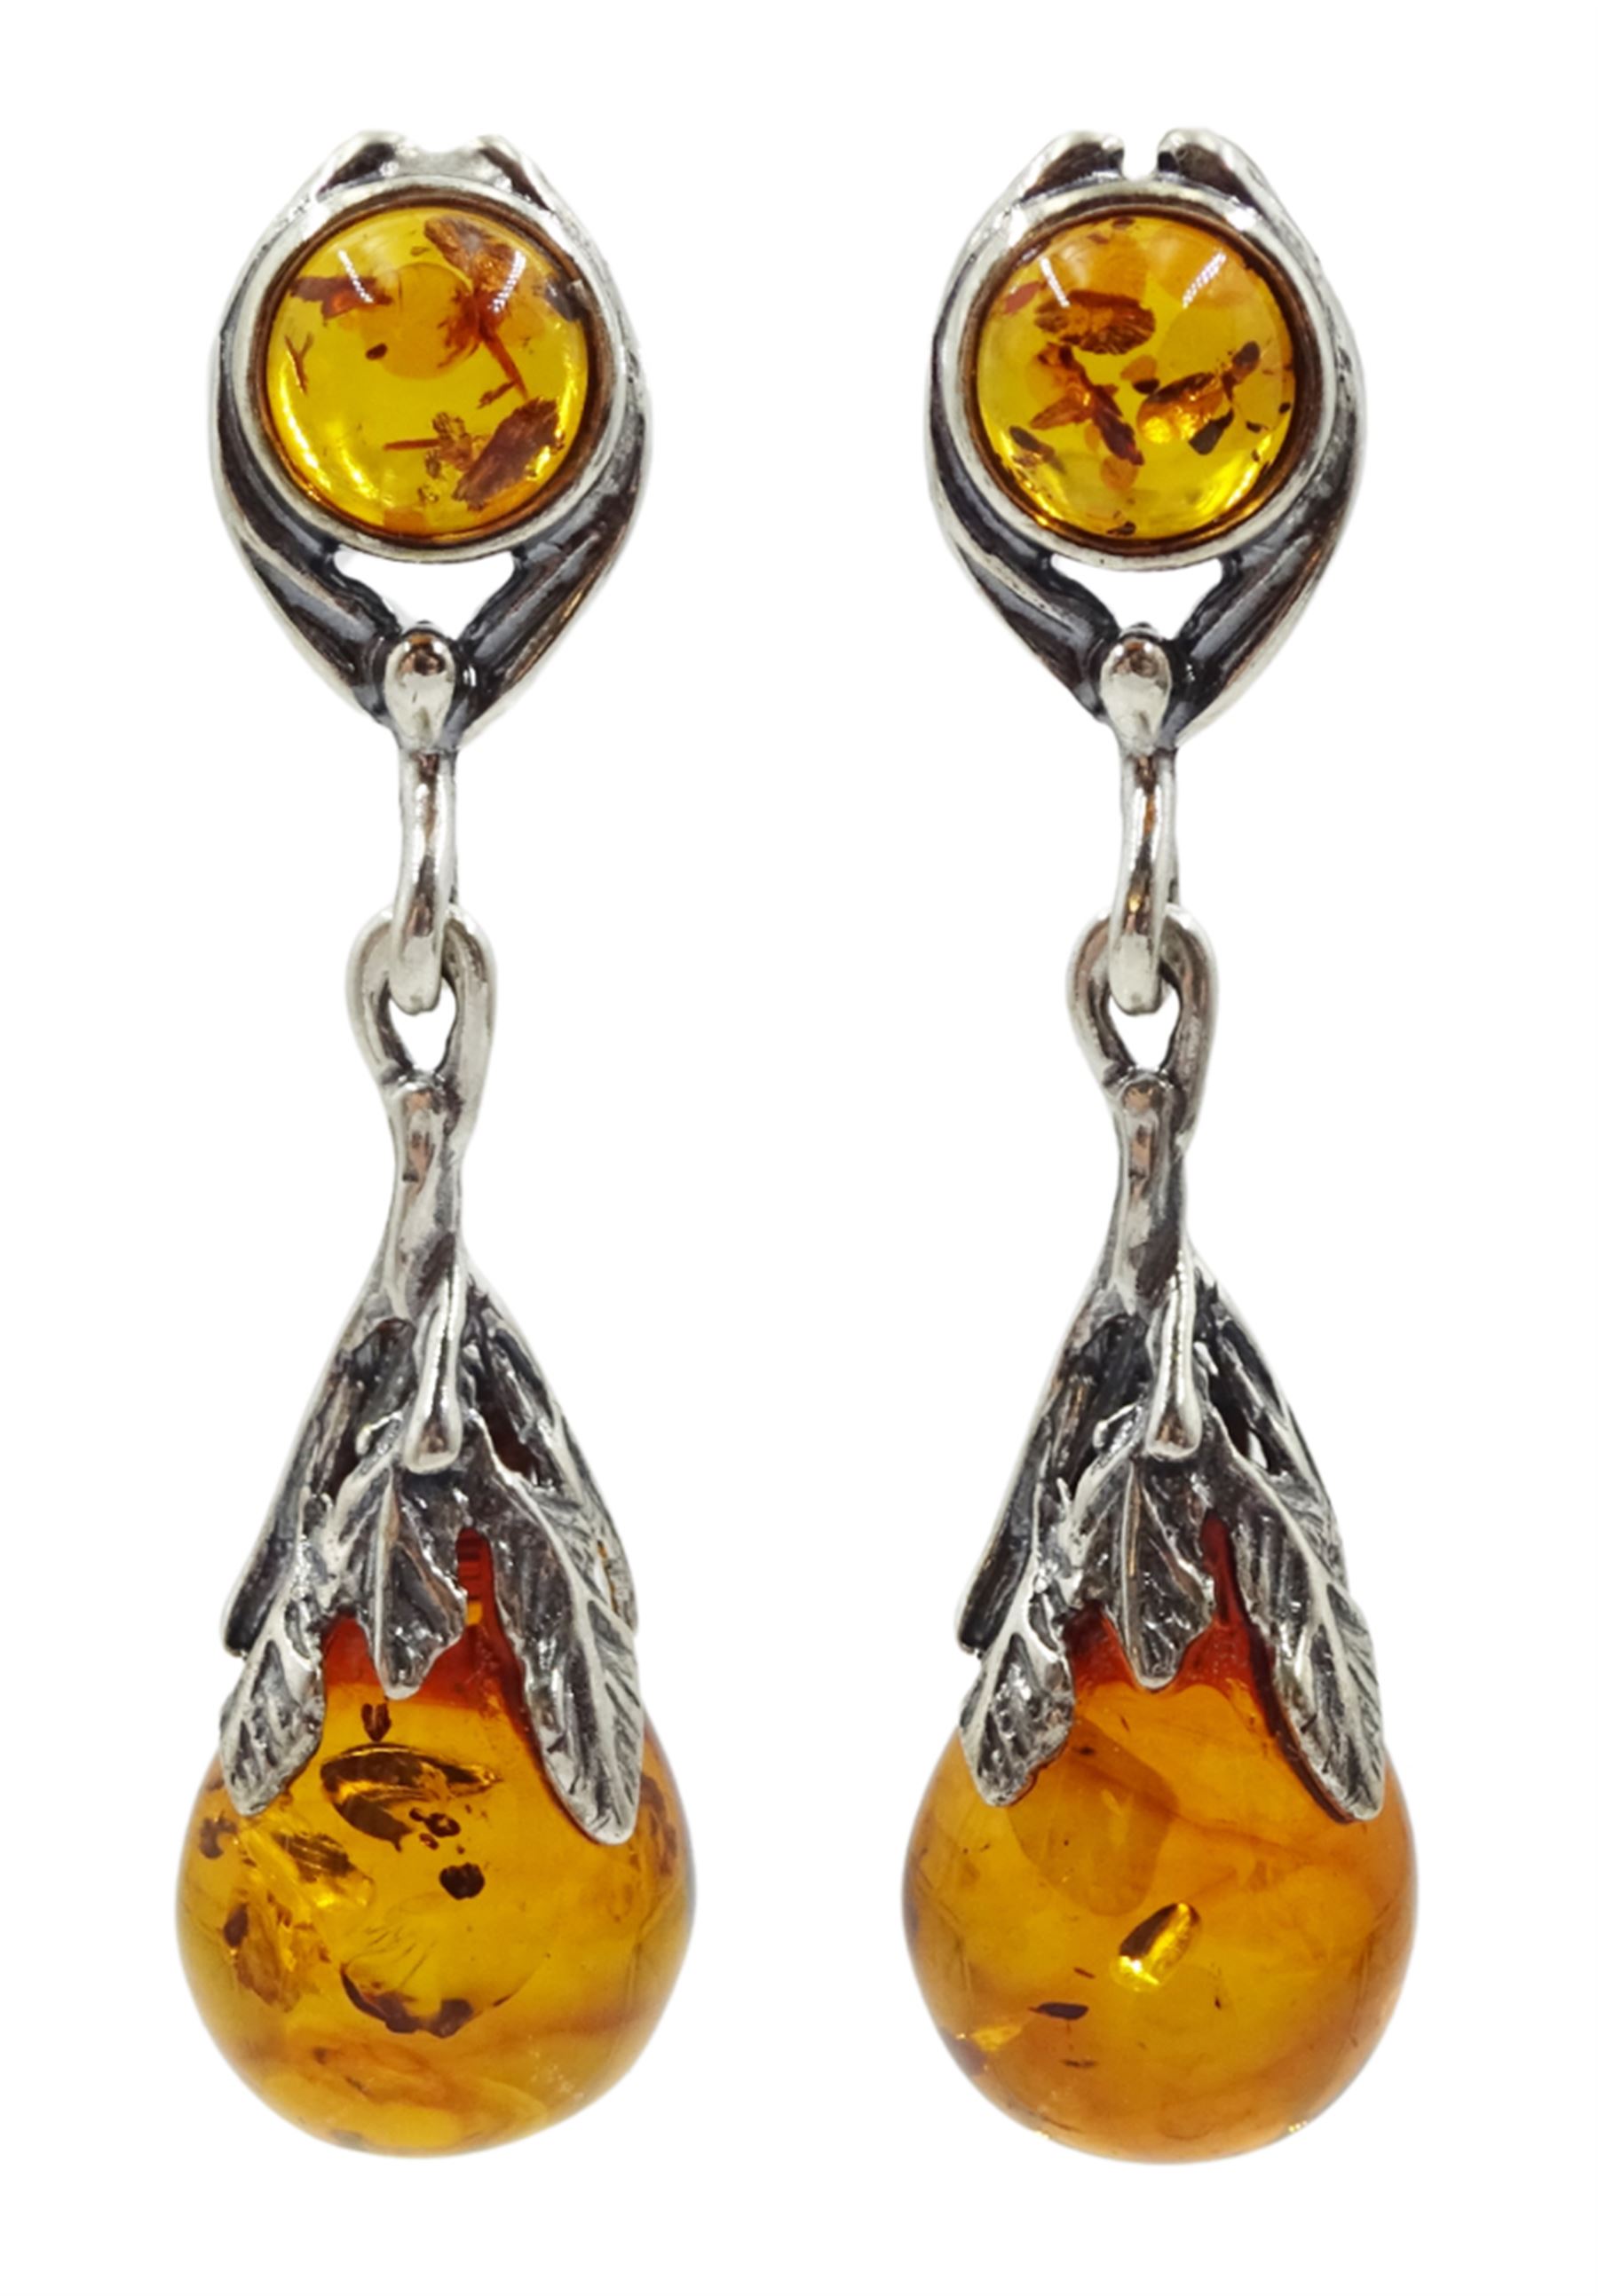 Pair of silver Baltic amber pendant earrings